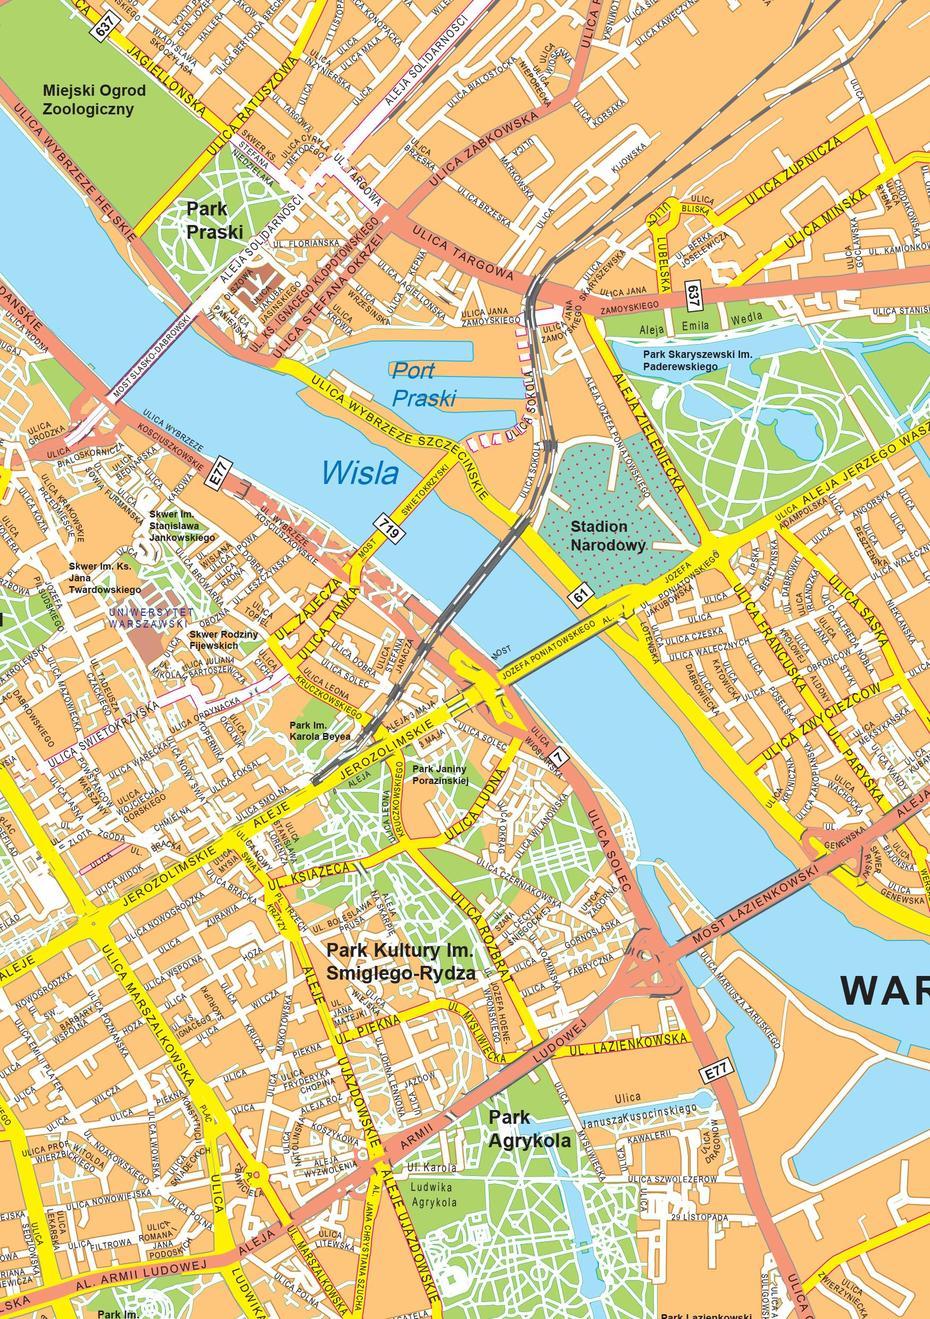 Digital City Map Warsaw 499 | The World Of Maps, Warsaw, Poland, Warsaw Indiana, Capital Of Poland